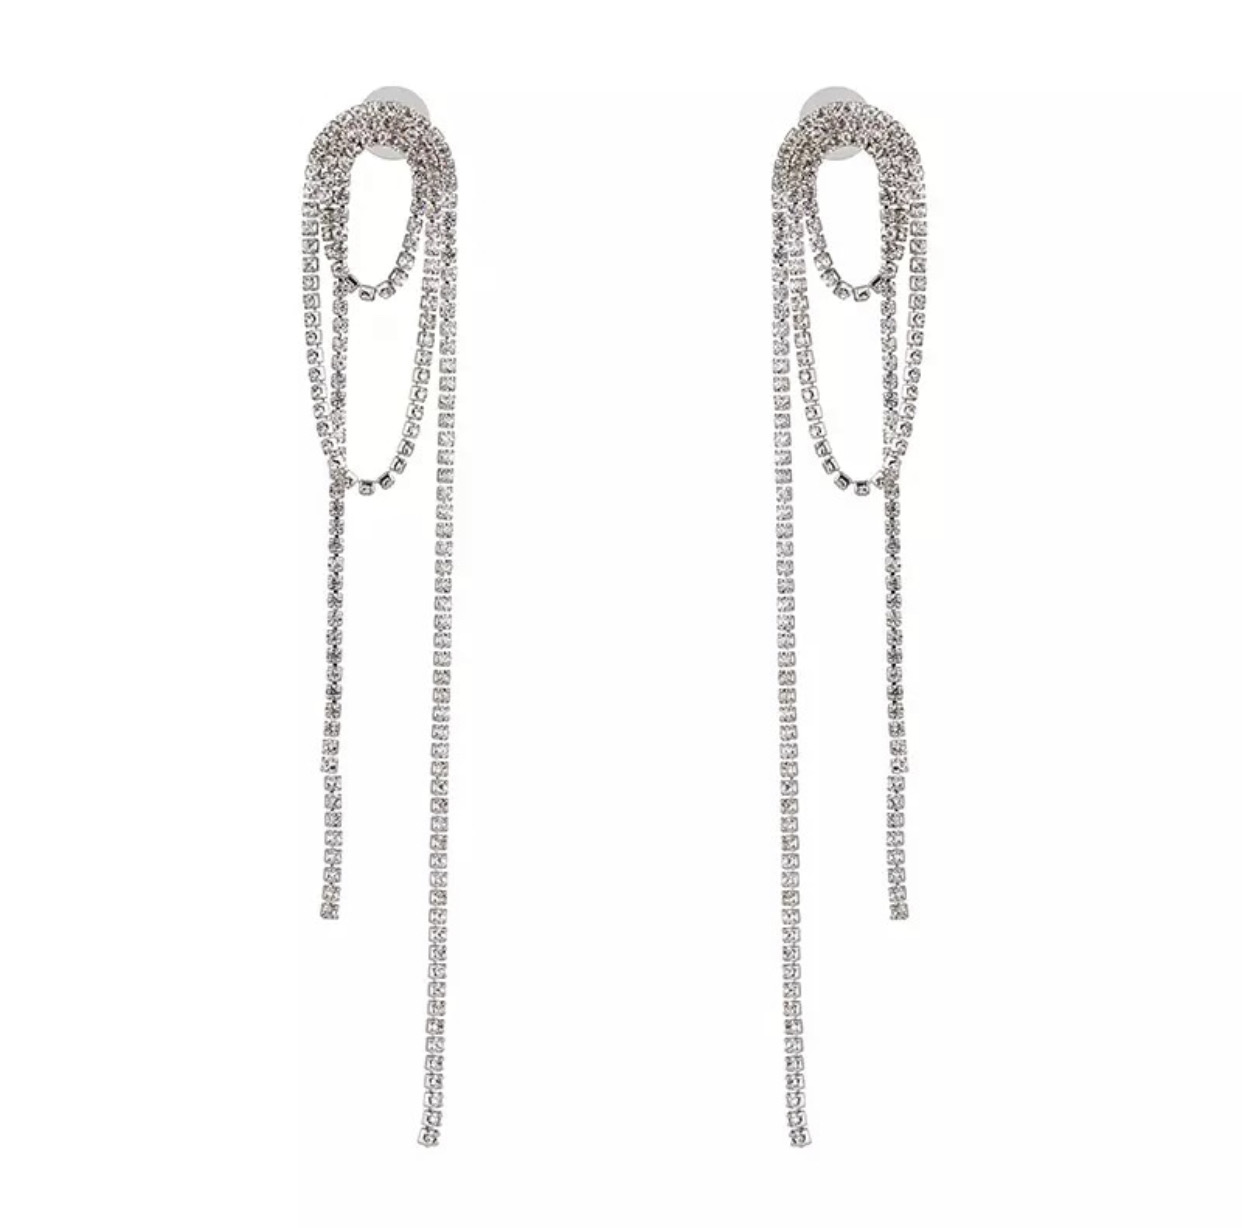 Fine Crystal Chain Earrings|Jessica|Jeanette Maree|Shop Online Now